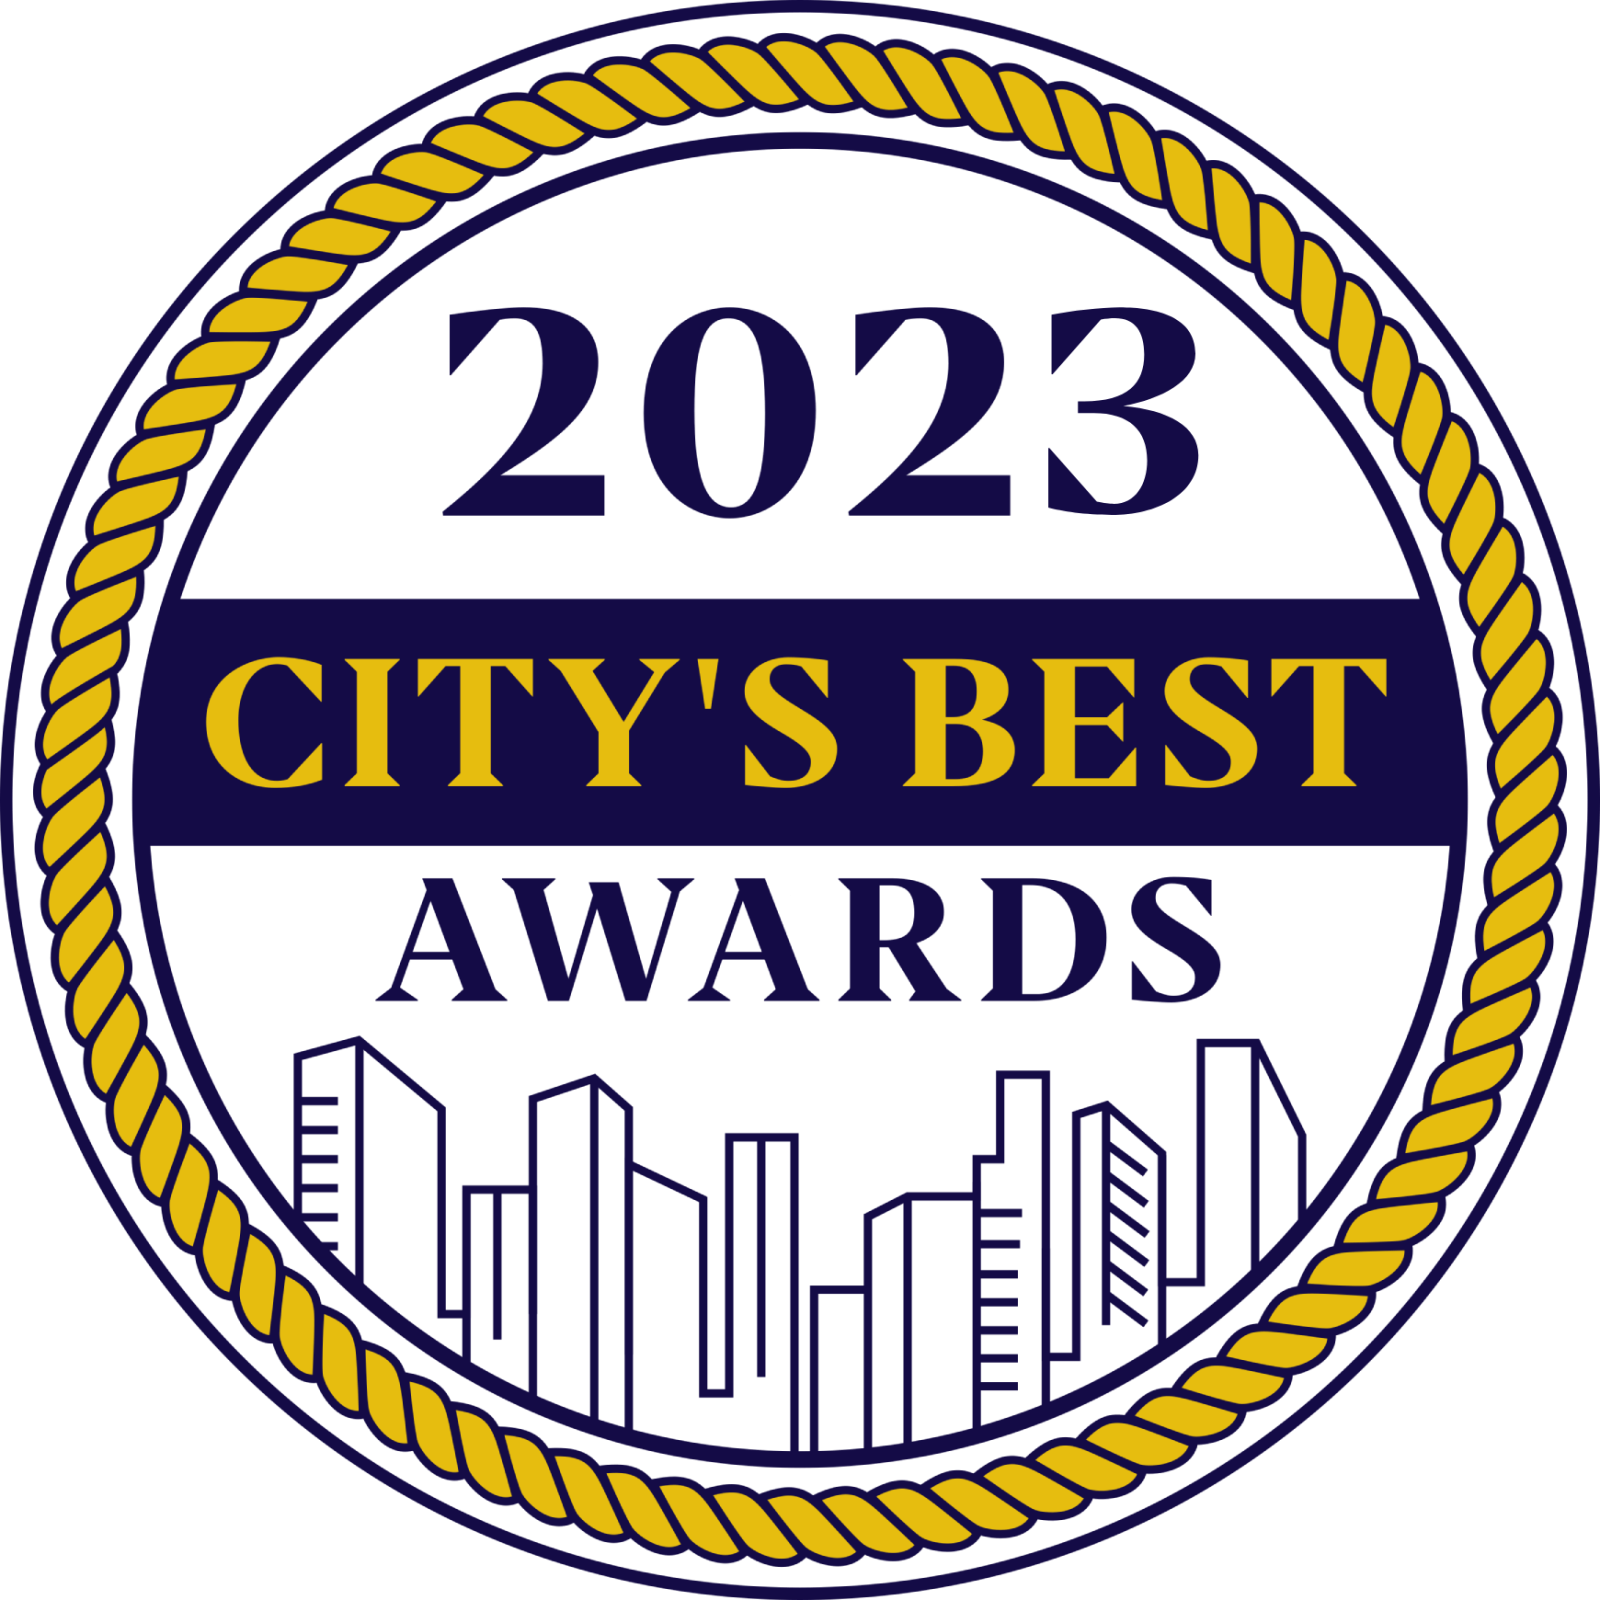 Pompano Beach Best City Award 2023